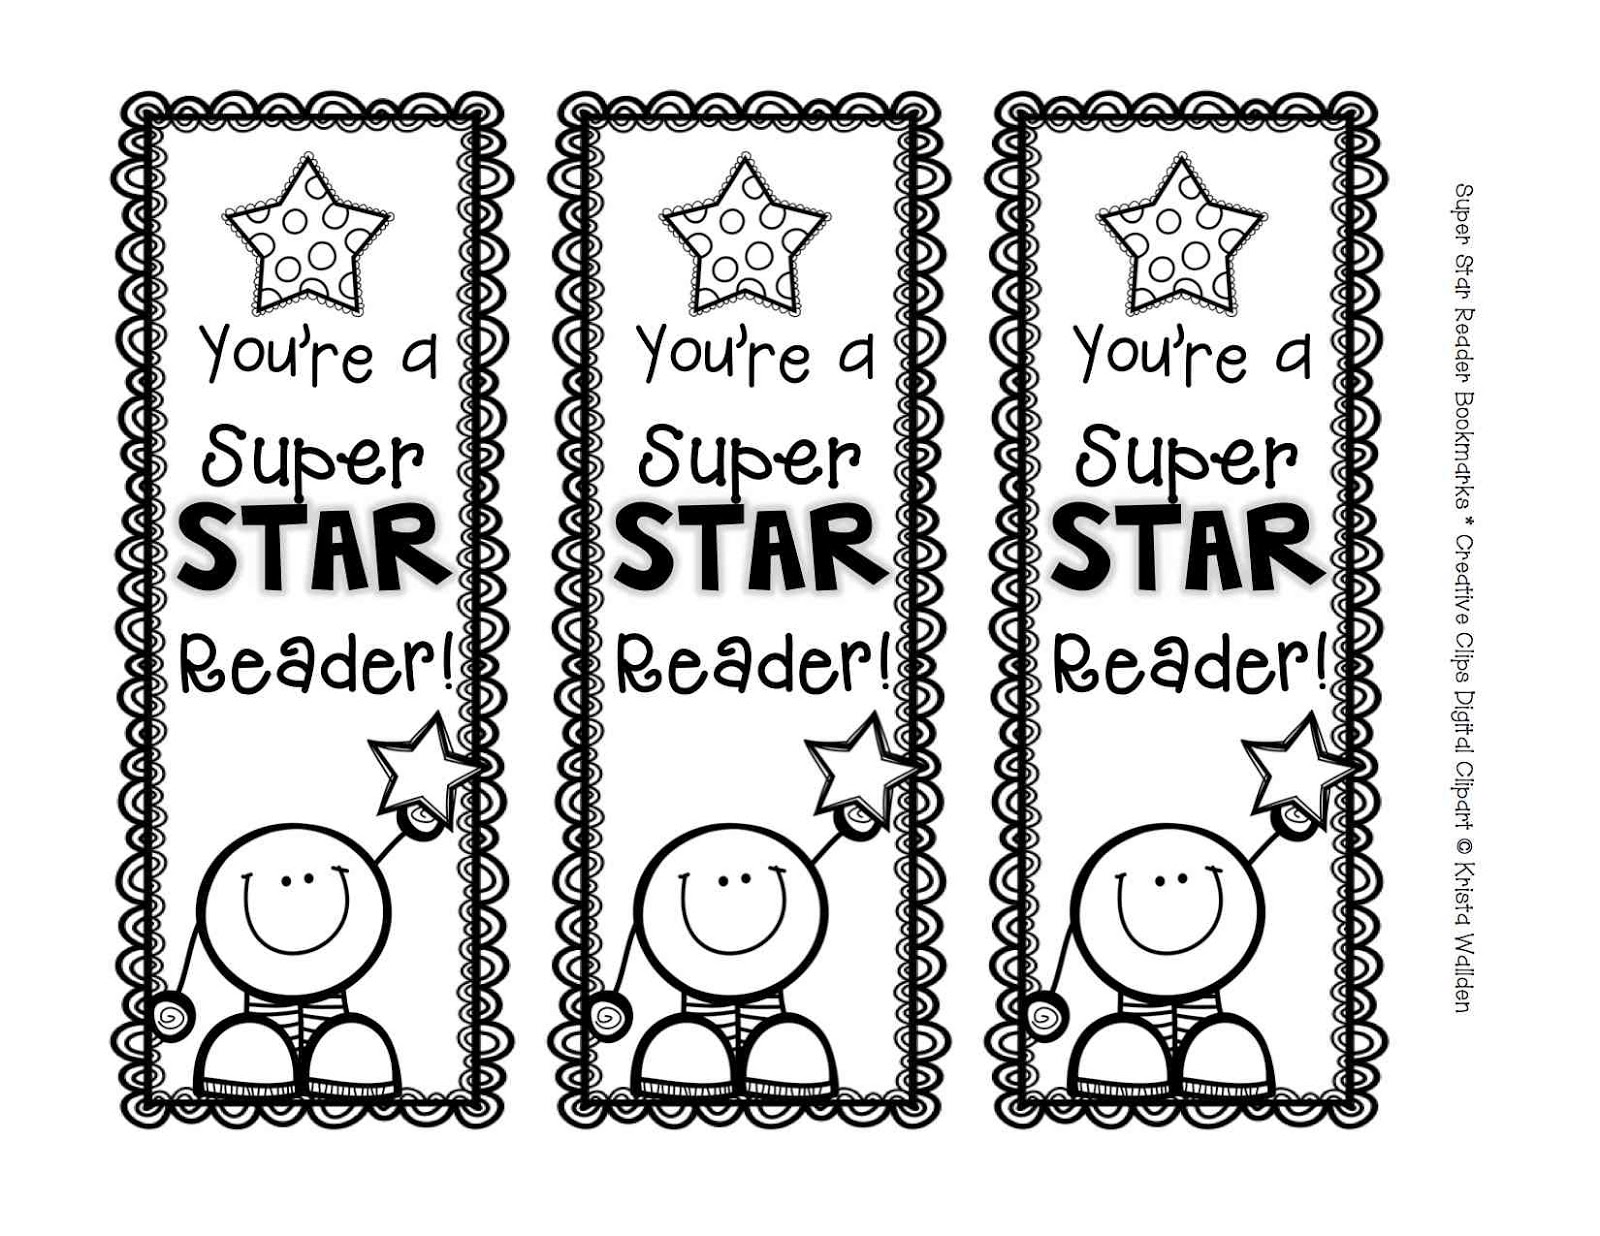 The Creative Chalkboard: Free Super Star Reader Bookmarks!